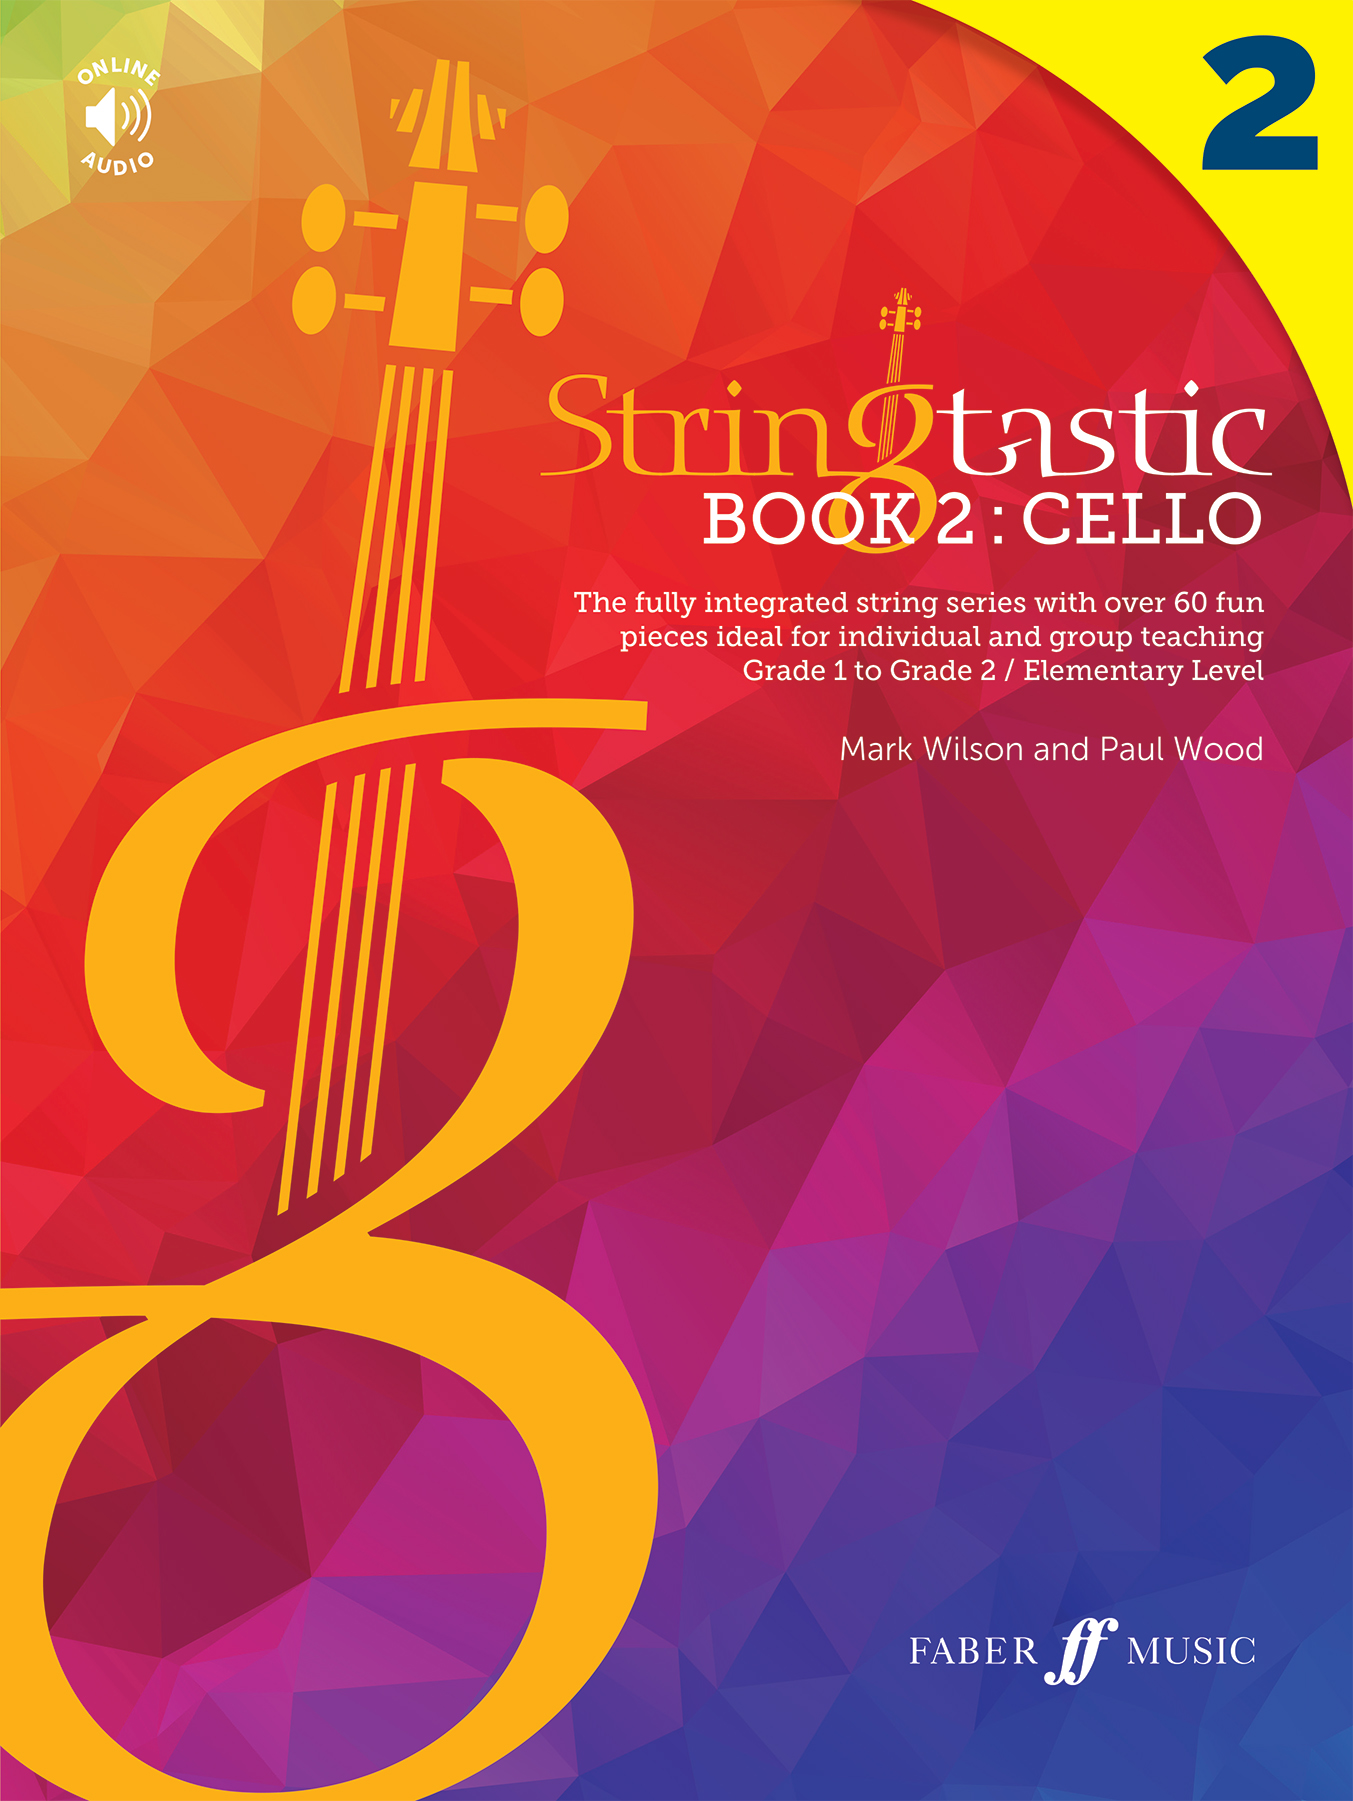 Stringtastic Book 2 Cello Sheet Music Songbook